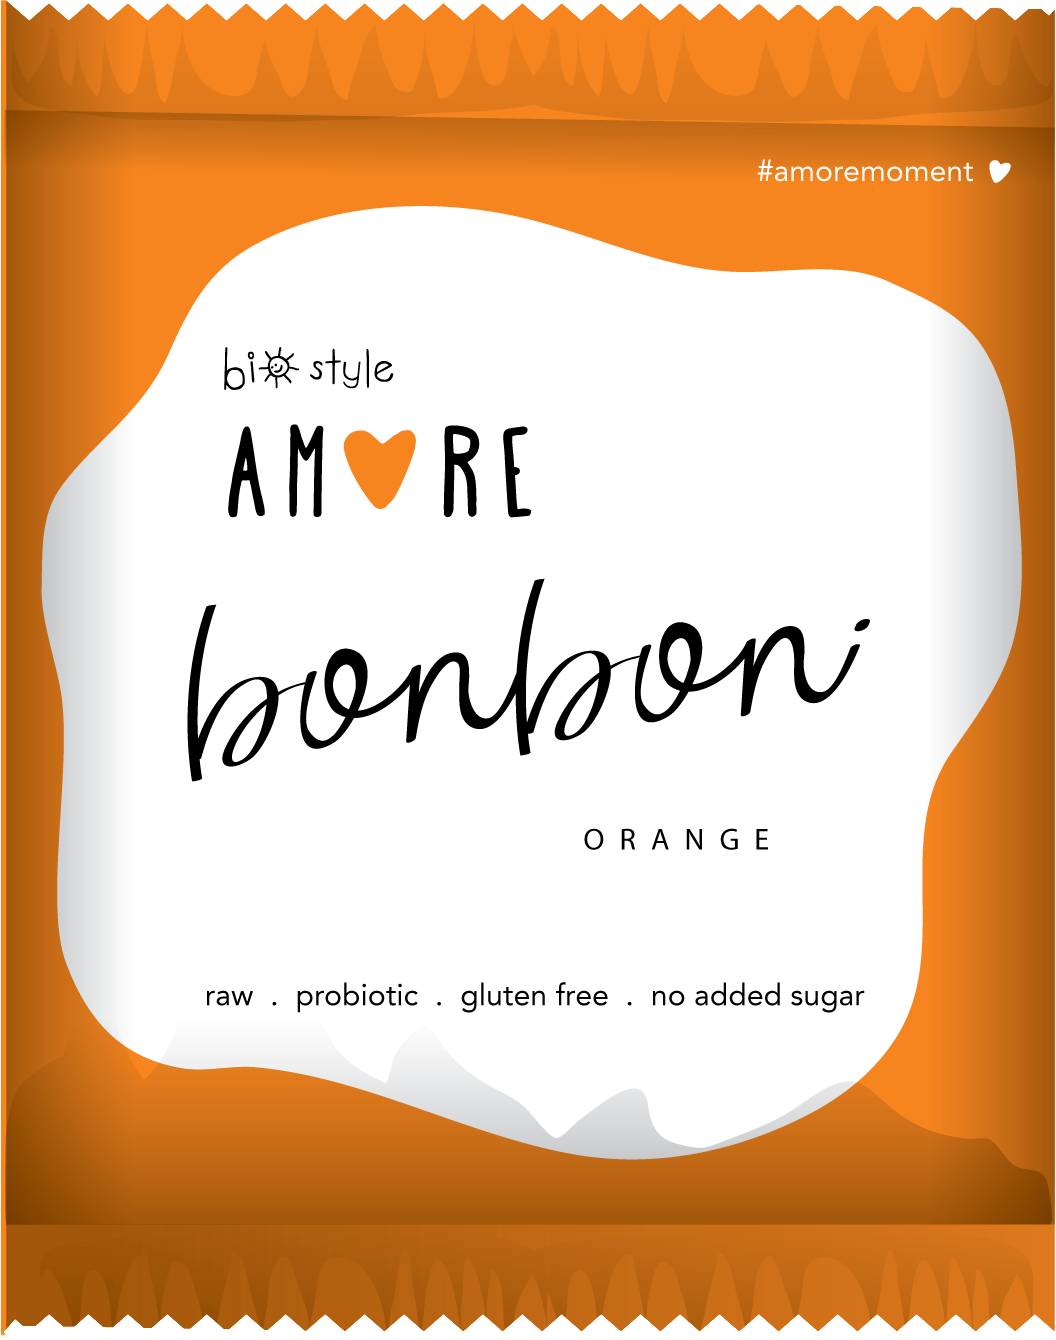 Bio "Orange" AMORE Bonbon glf probiotic 40g